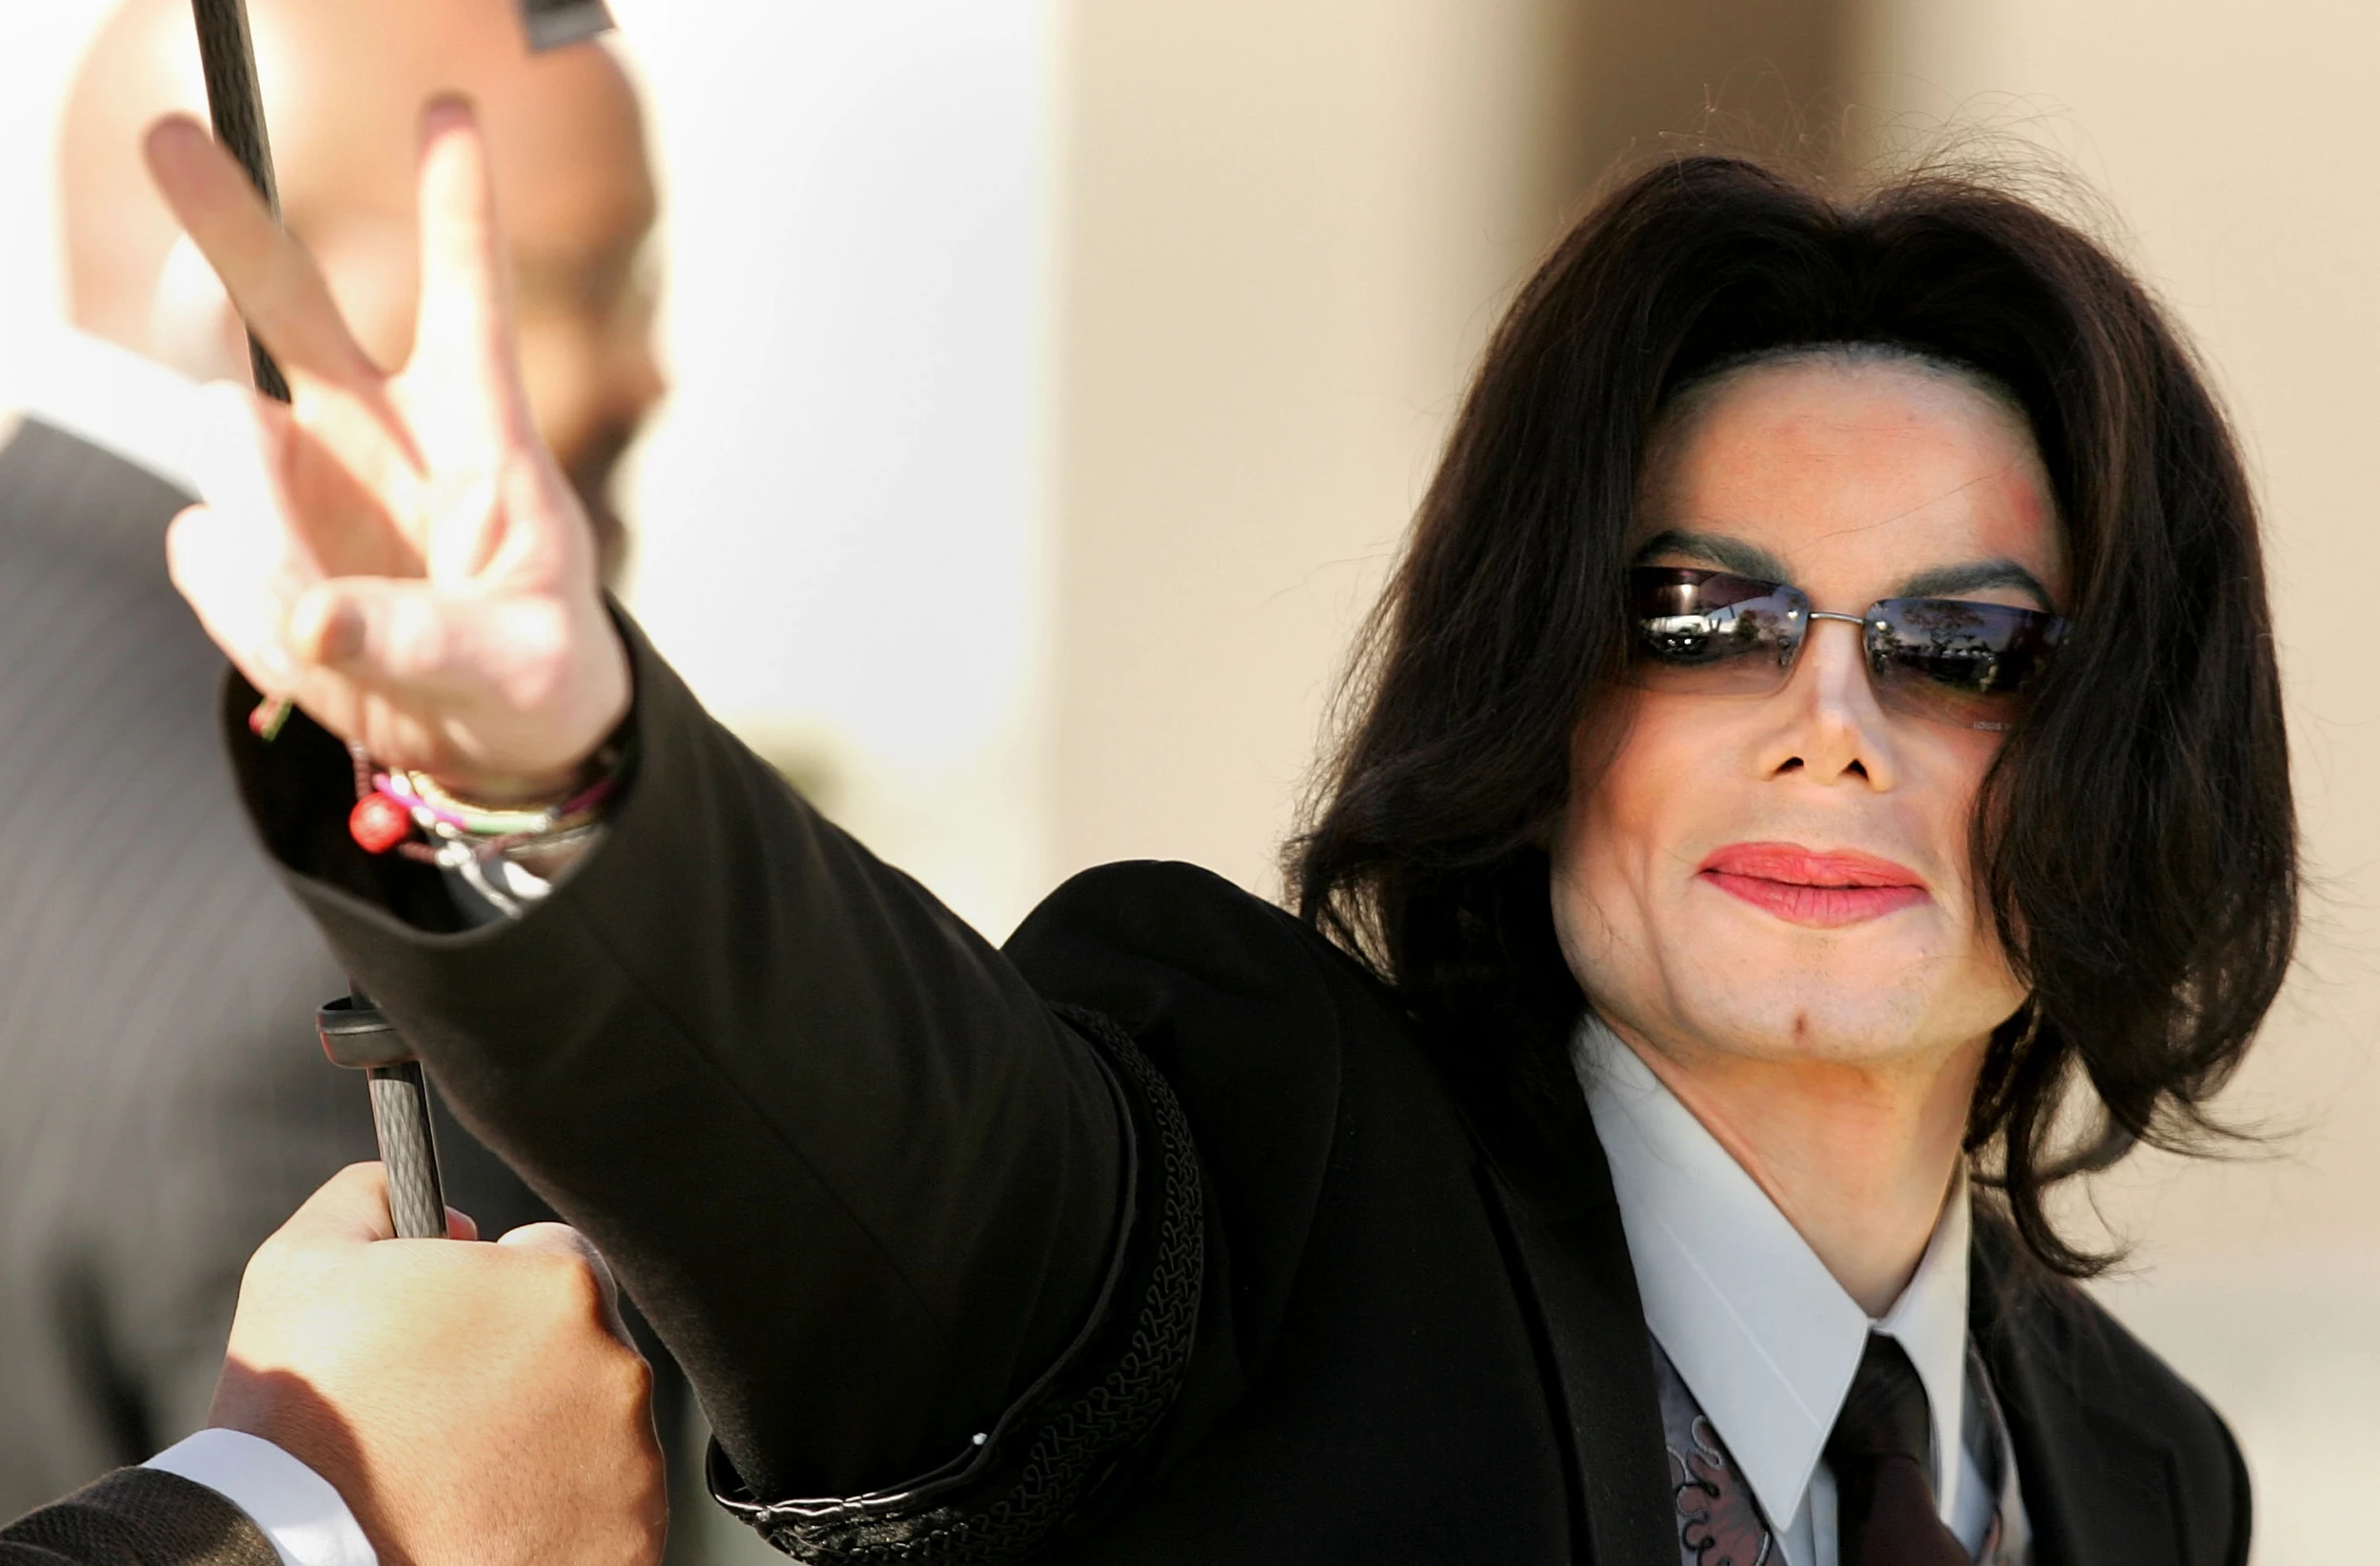 Devon Live - An iconic white glove worn by Michael Jackson